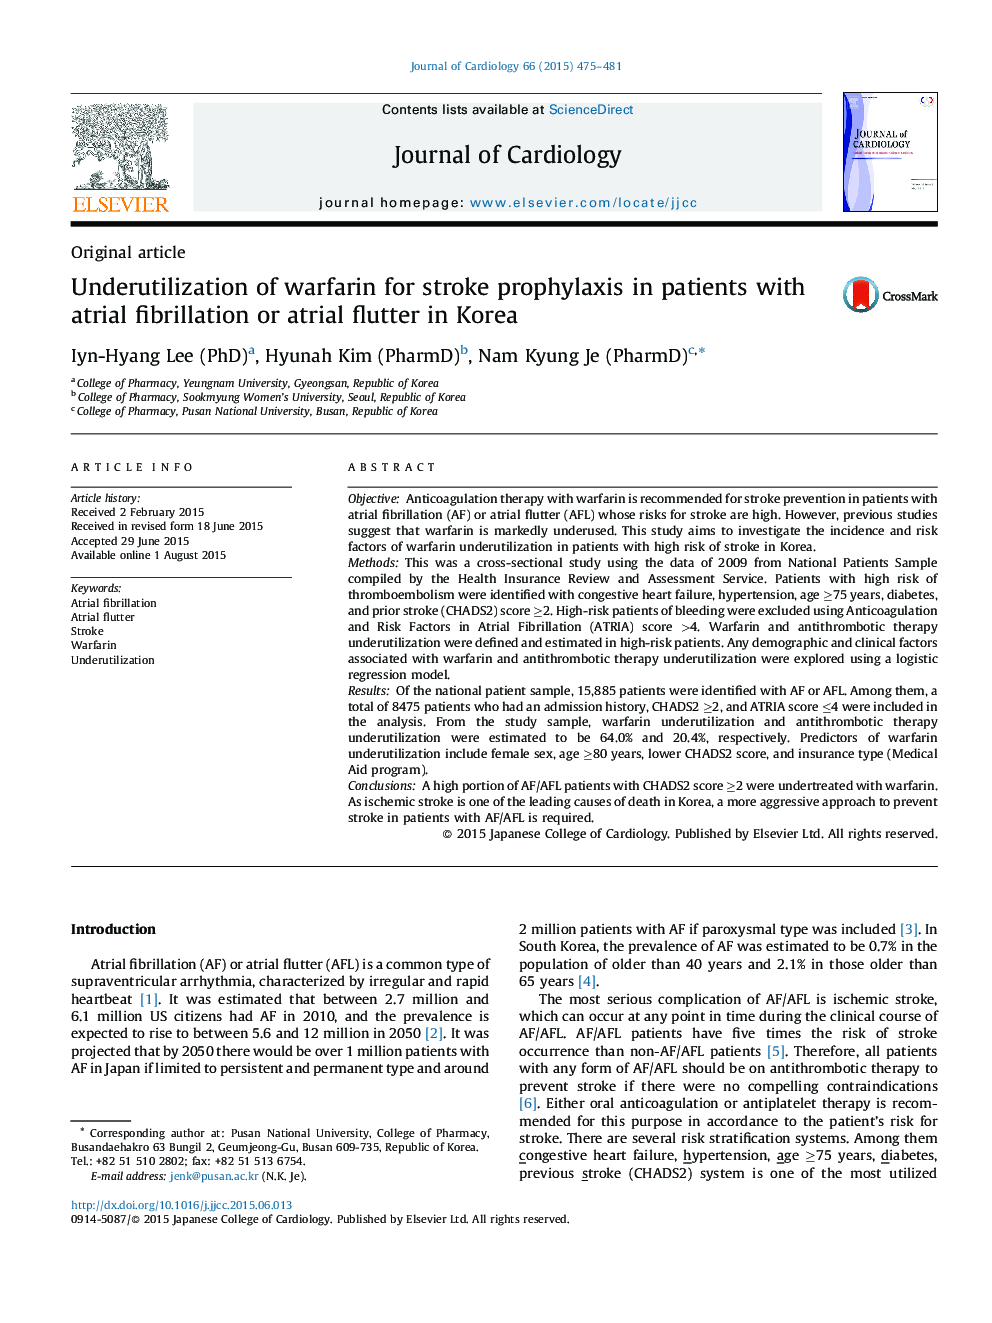 Underutilization of warfarin for stroke prophylaxis in patients with atrial fibrillation or atrial flutter in Korea